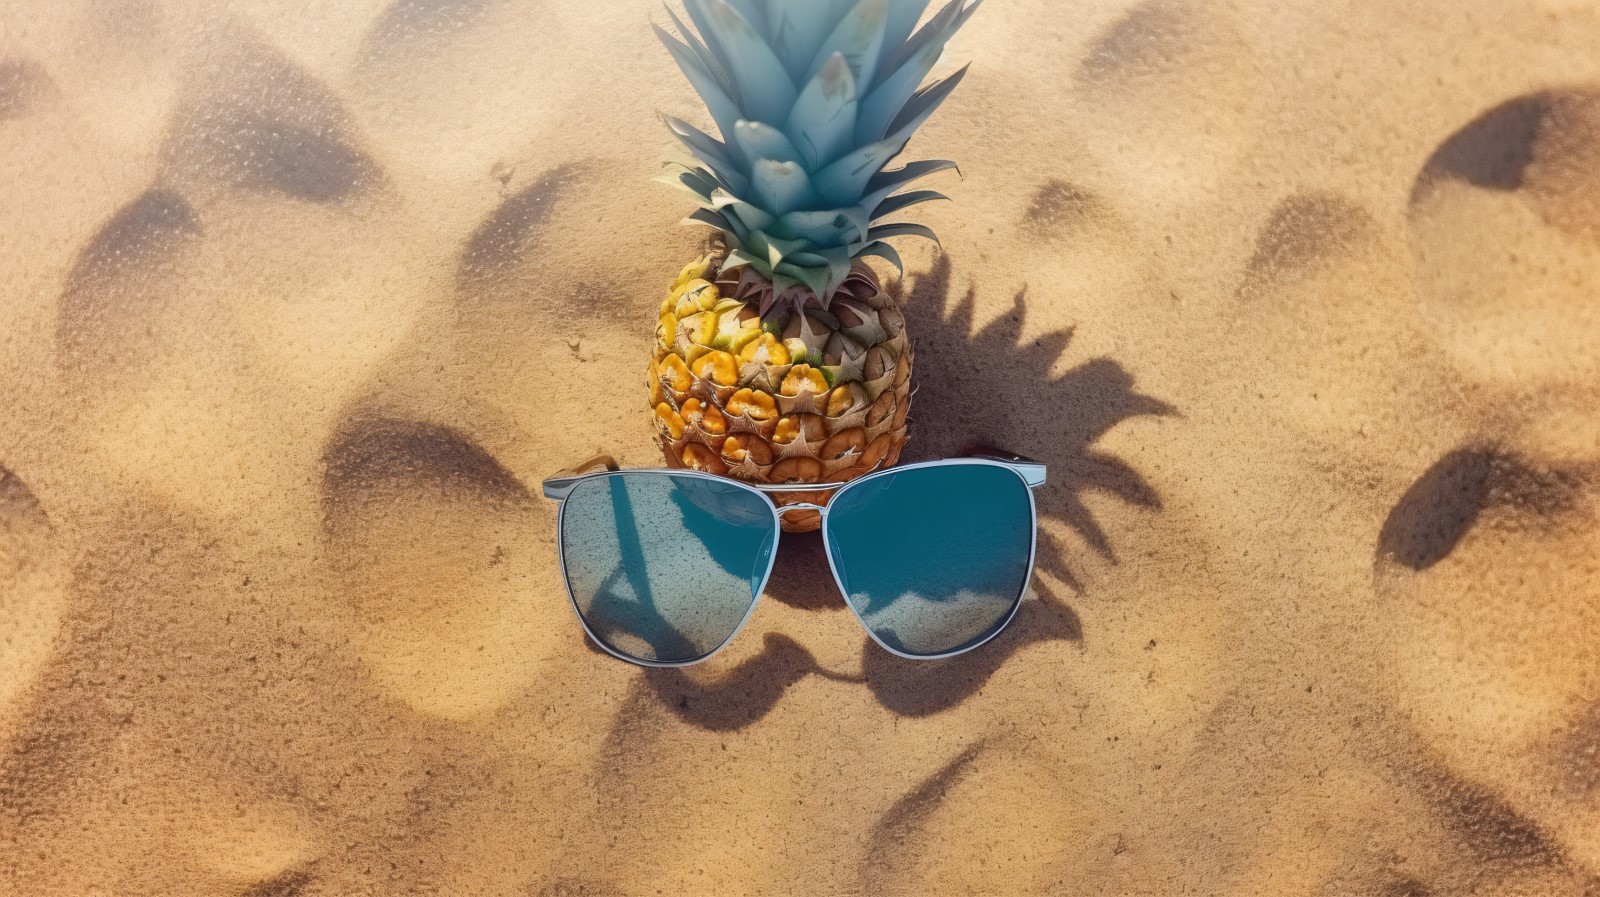 Halved pineapple and a sunglass kept on the sand 182